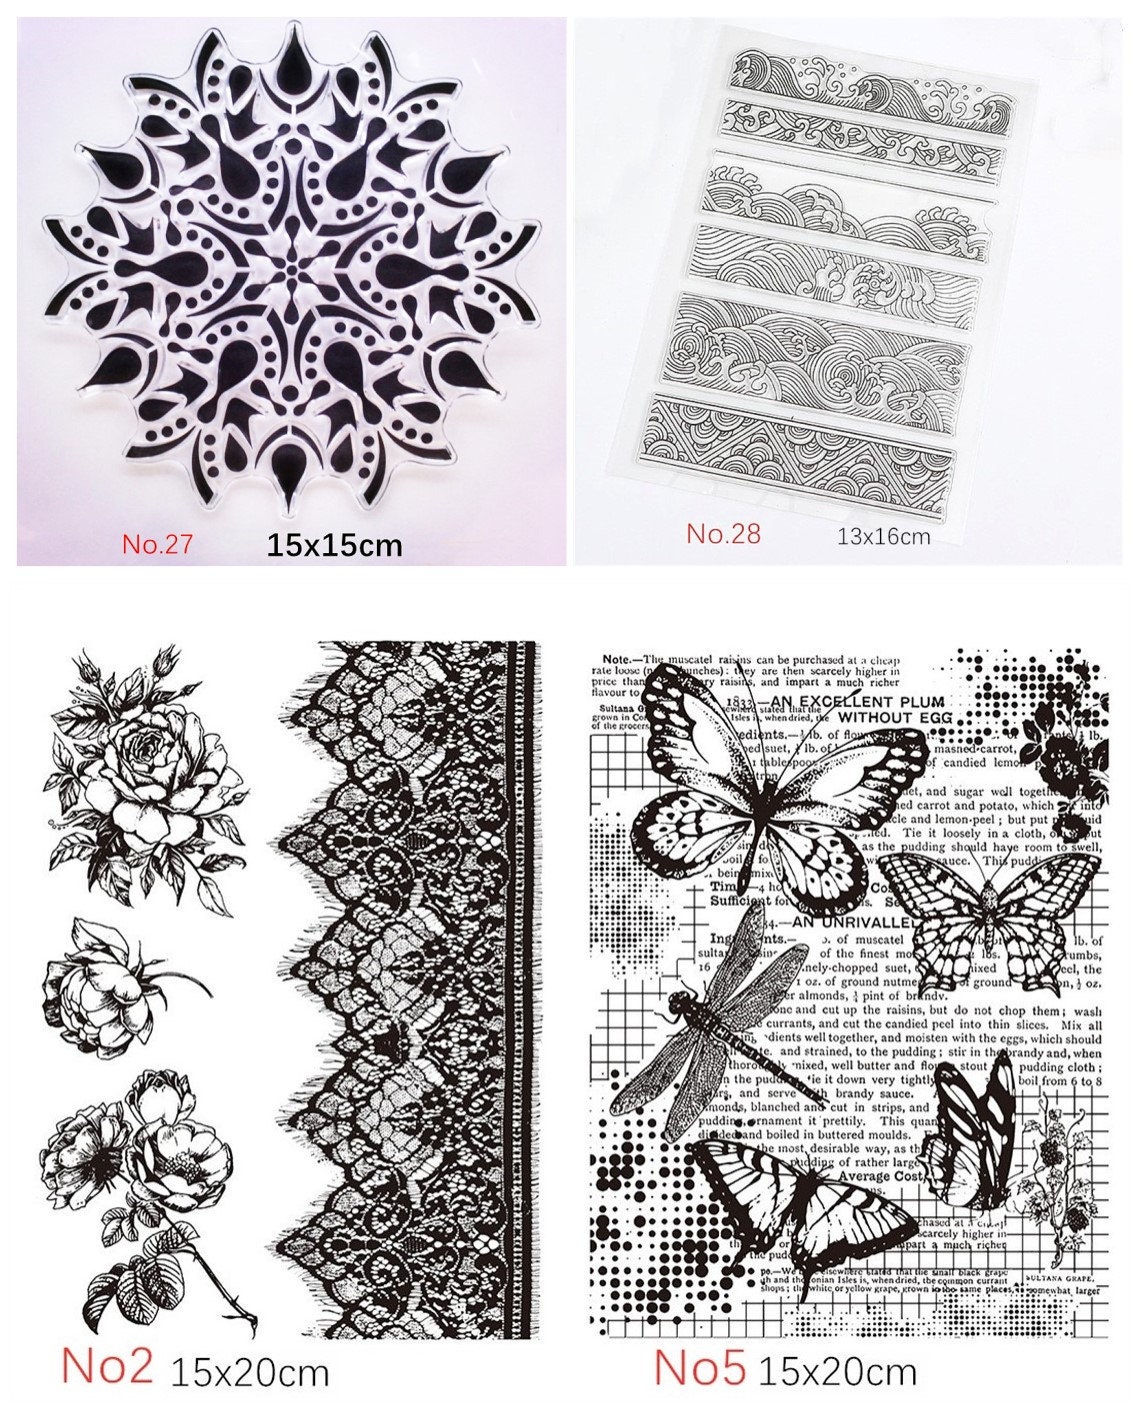 Mandala Pattern Polymer Clay Texture Stamp Sheets Art Clay Craft Supplies  Kits DIY Emboss Individual Design Pottery Tools 9x9cm